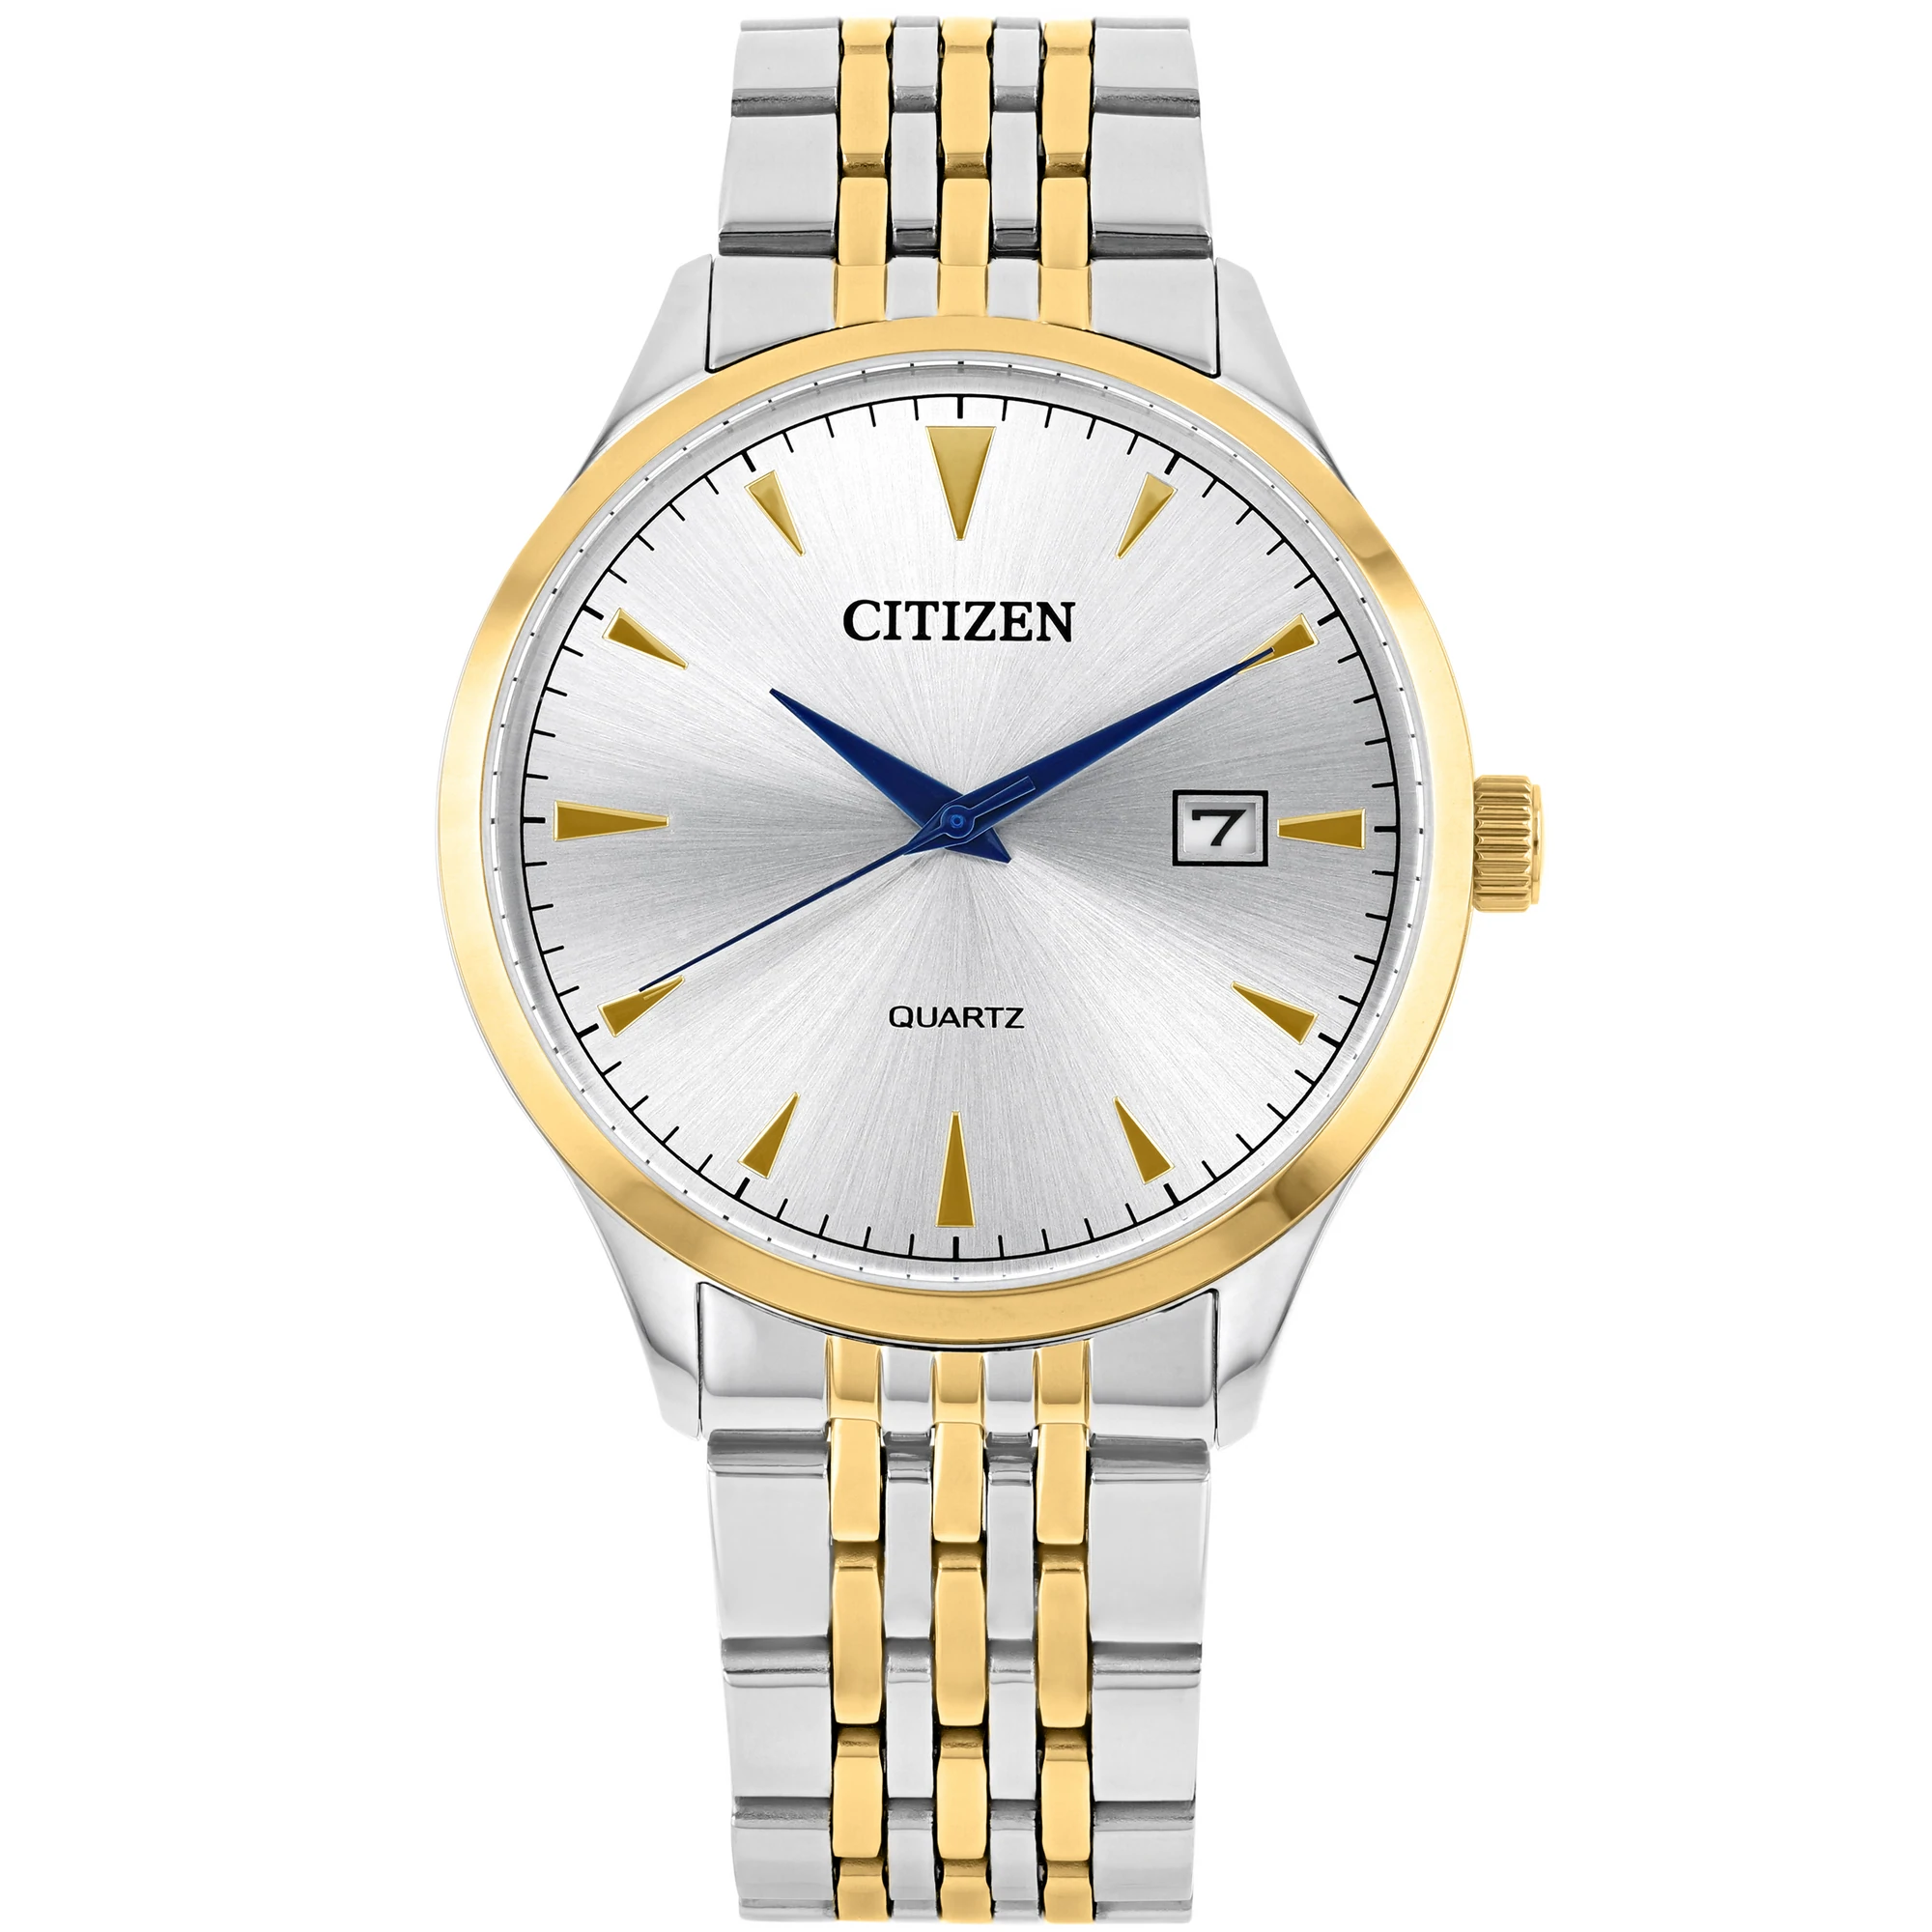 Citizen - DZ0064-52A - Stainless Steel Watch For Men